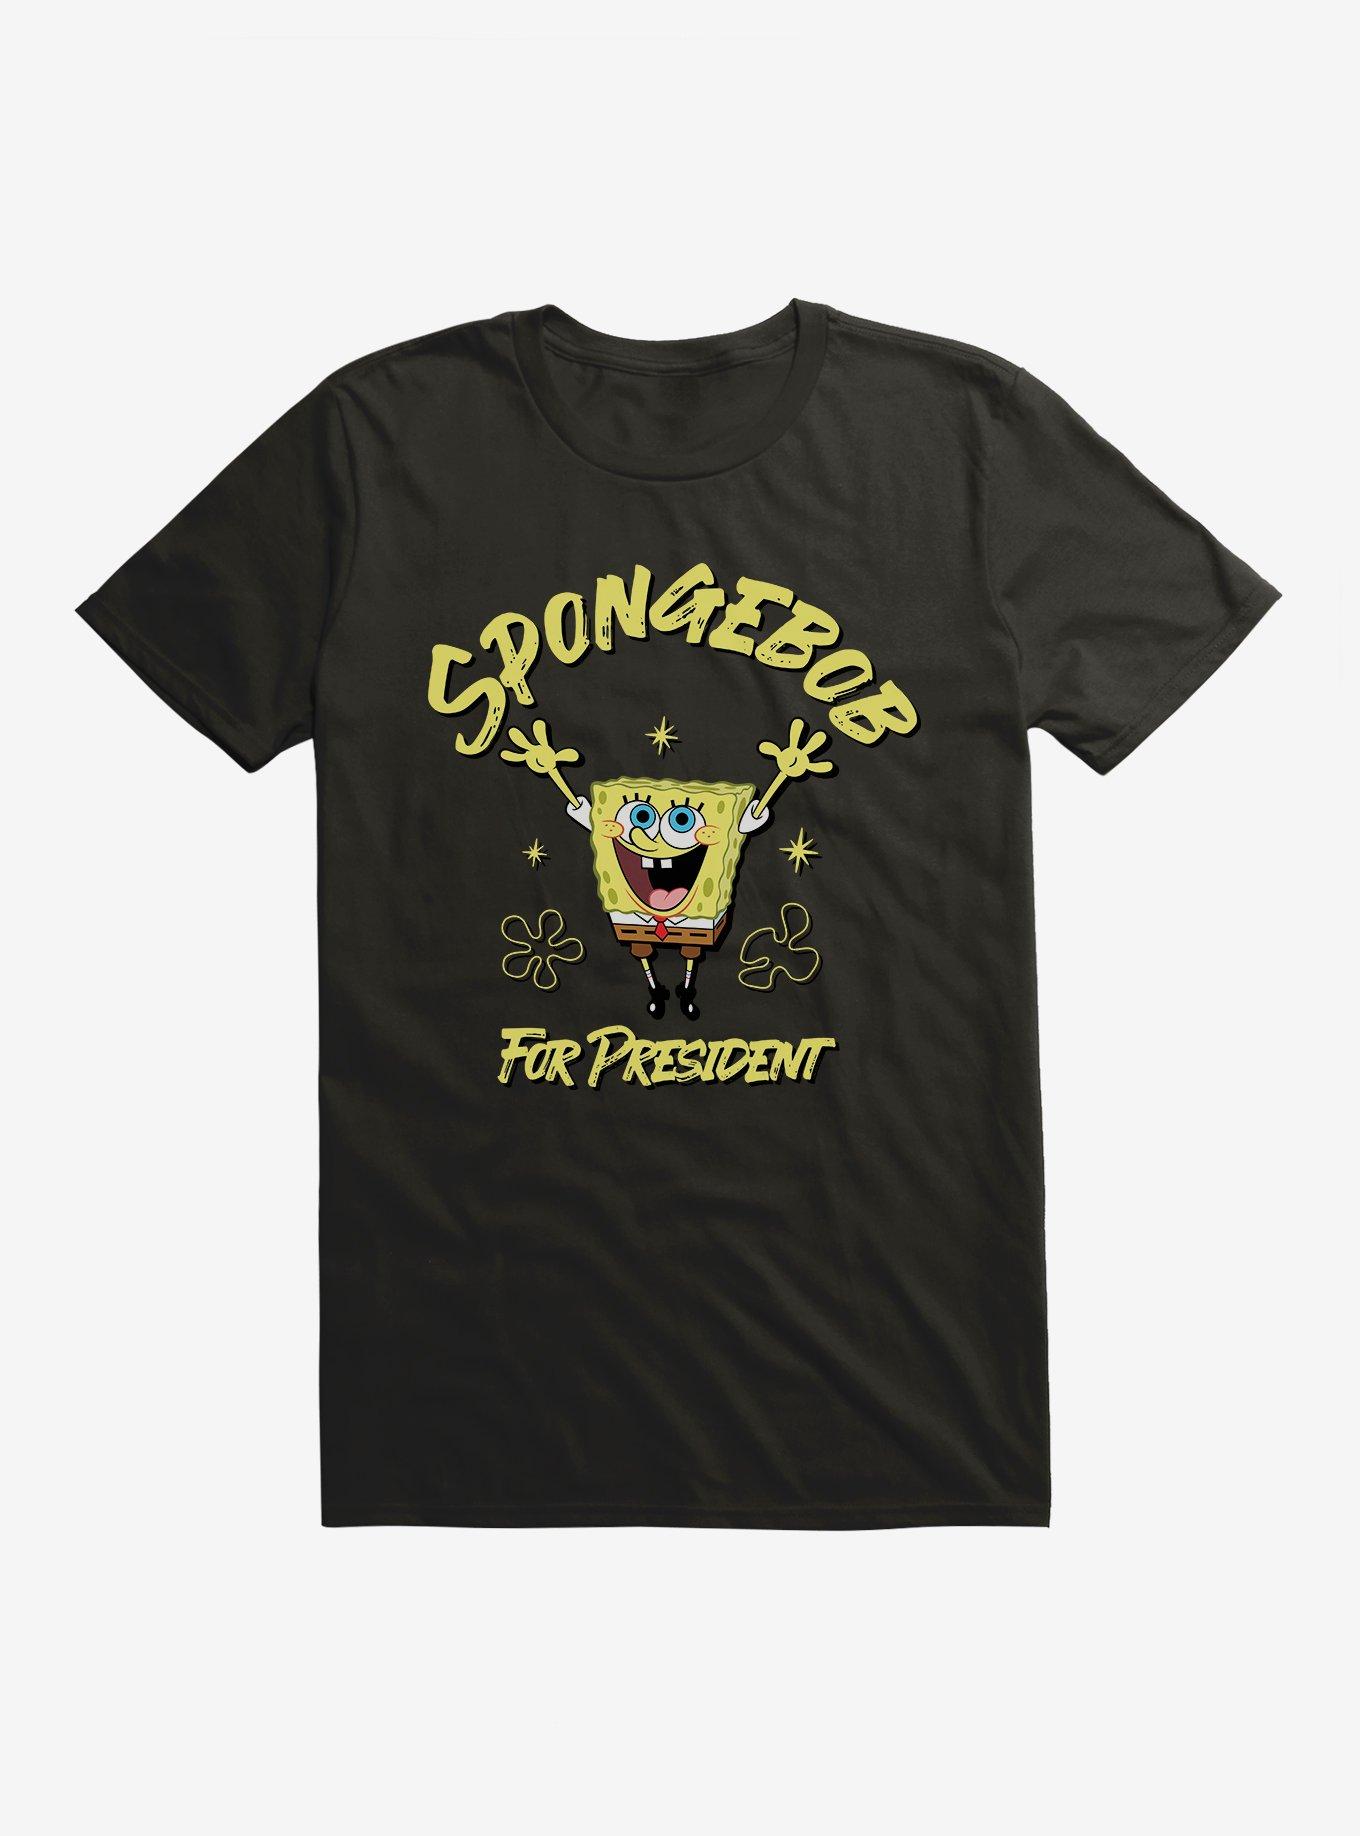 SpongeBob SquarePants For President T-Shirt